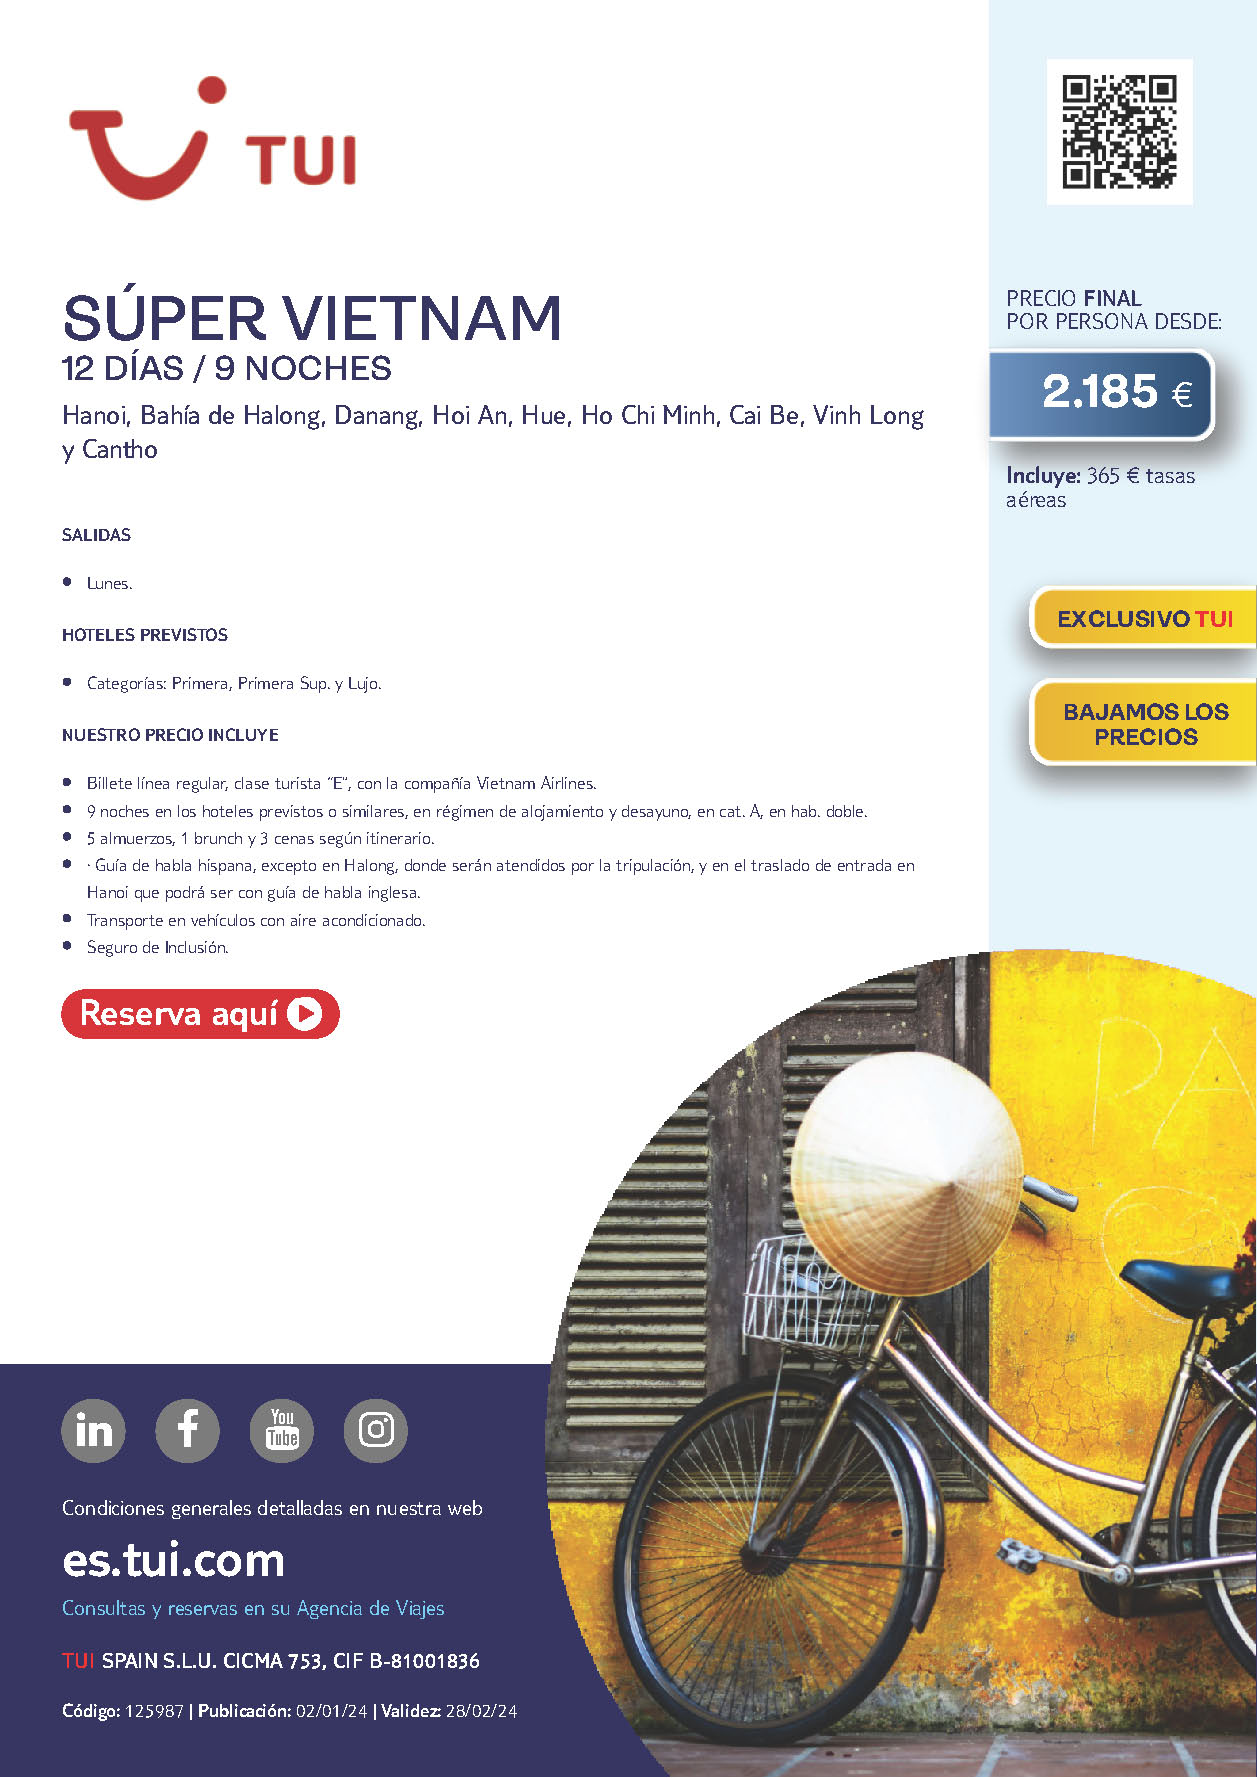 Oferta-Tui-2024-circuito-Super-Vietnam-12-dias-salidas-desde-Madrid-vuelos-Vietnam-Airlines